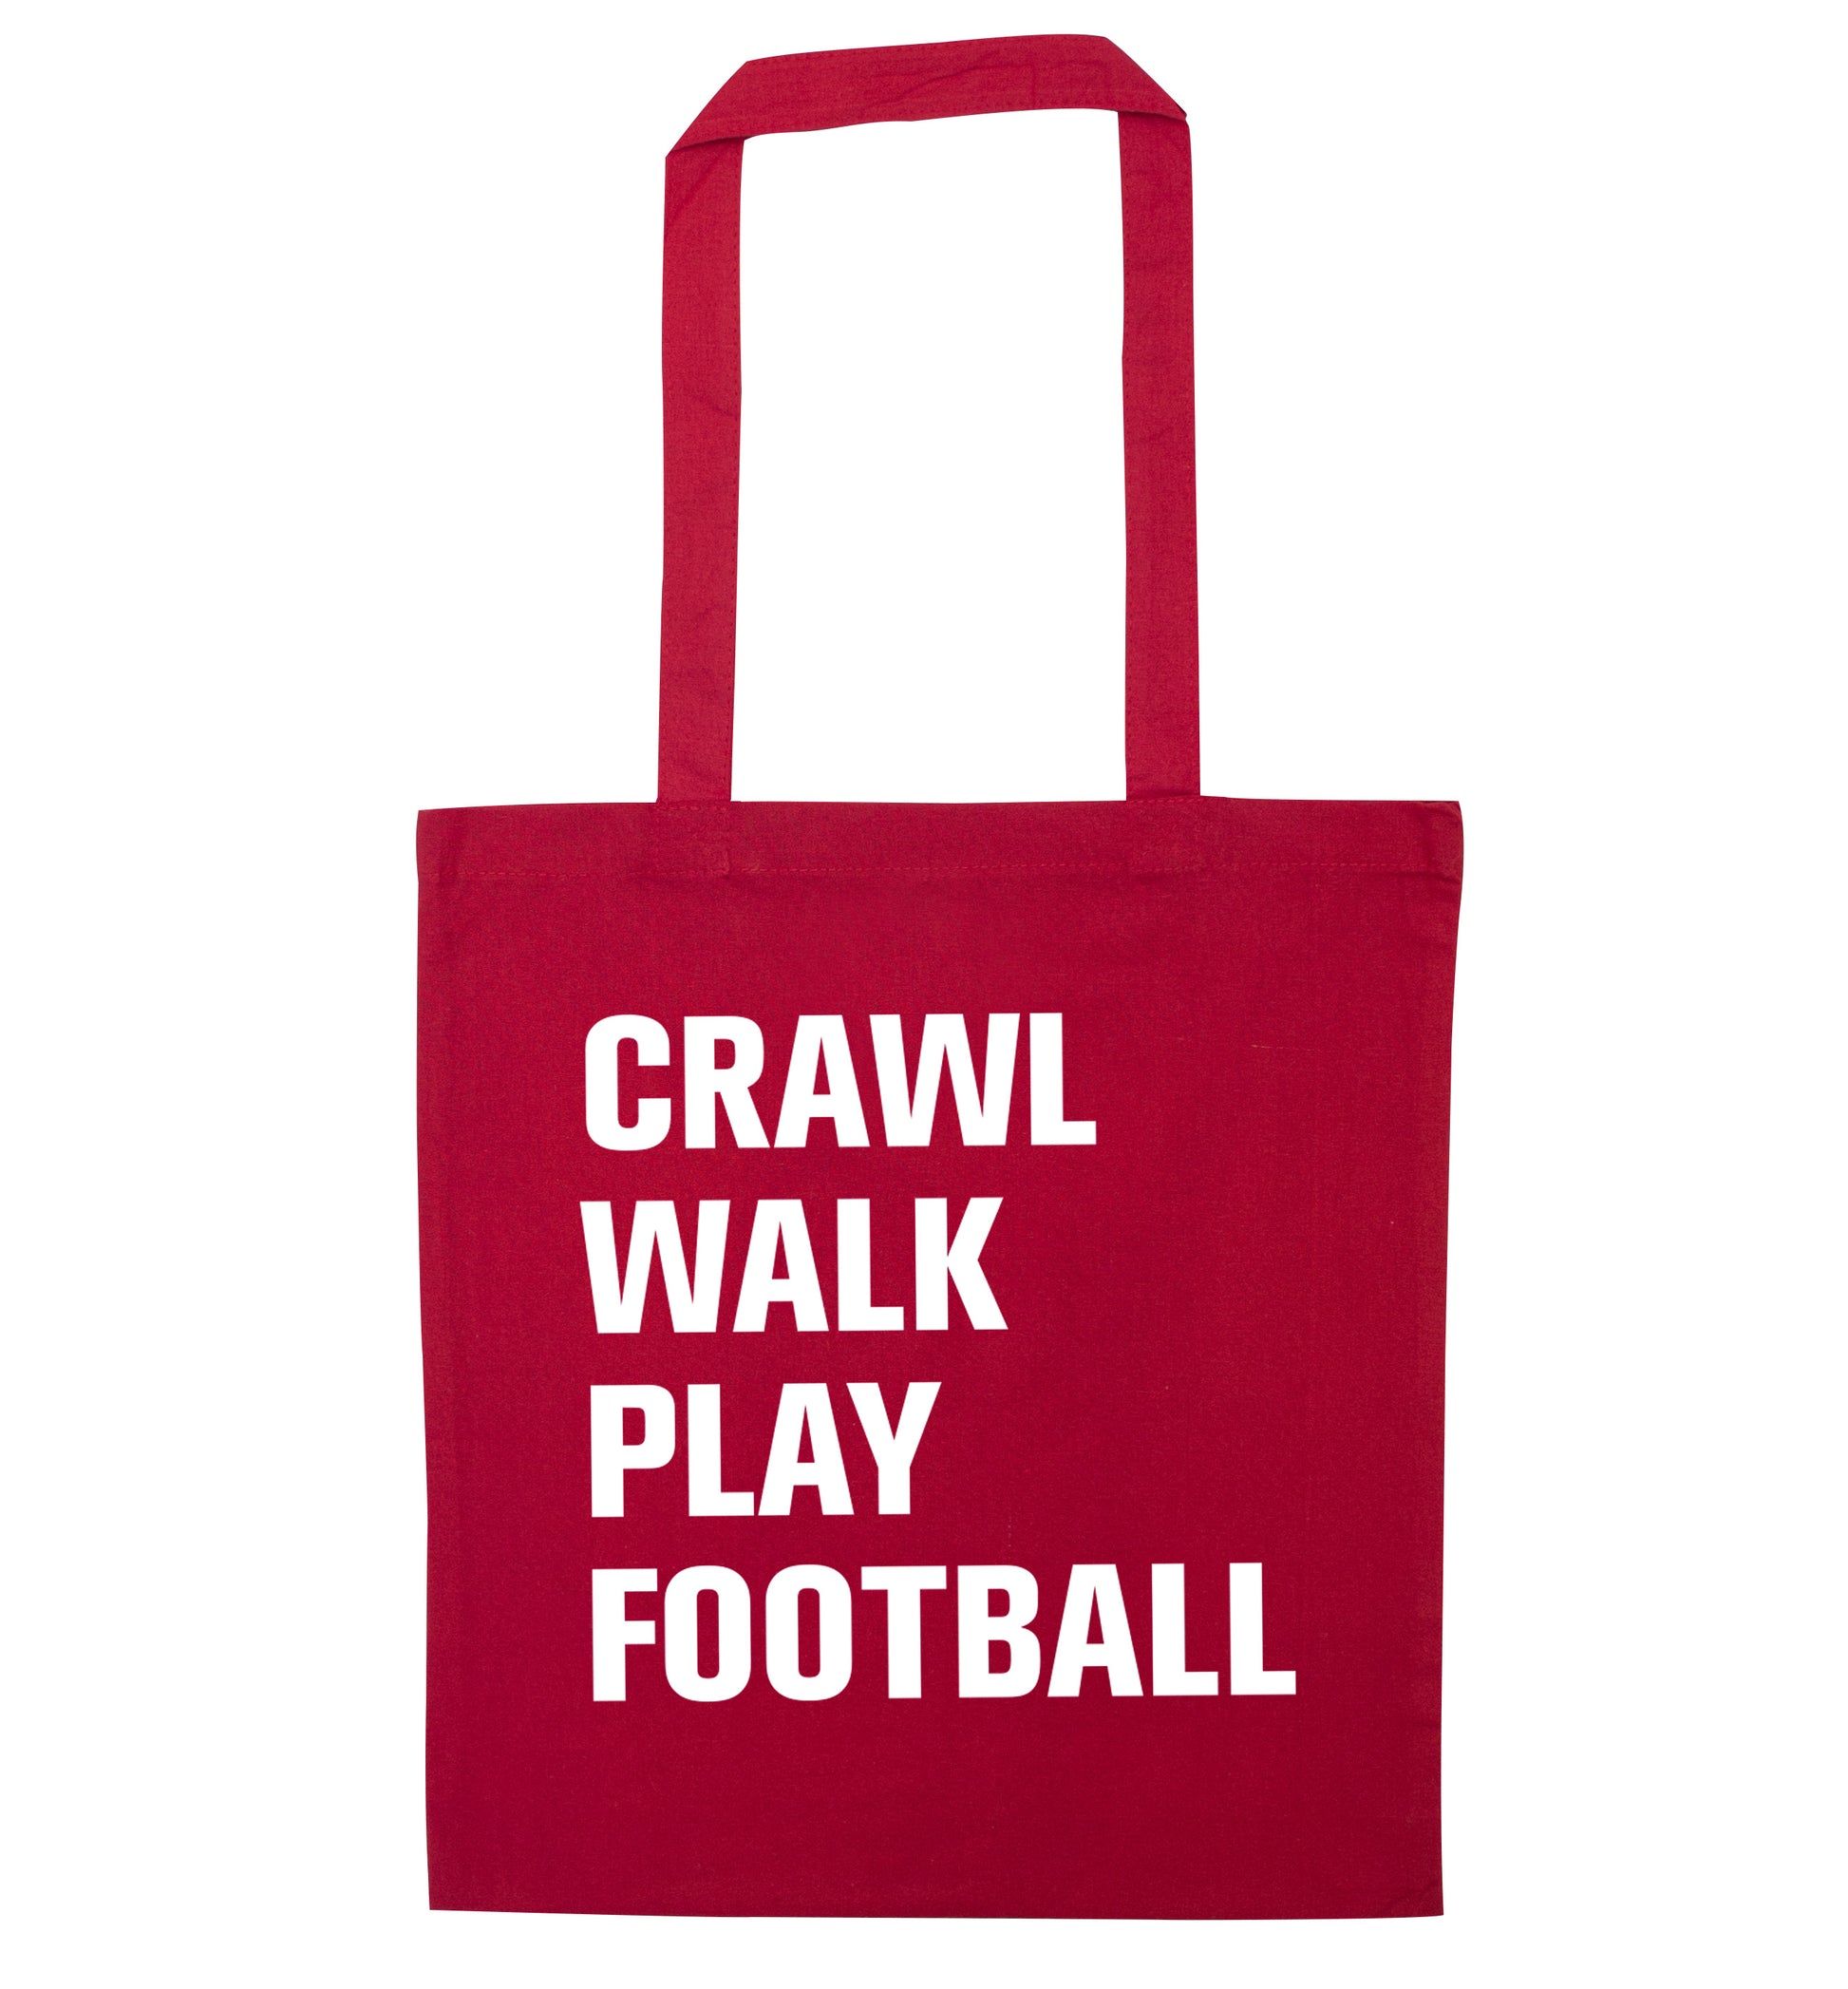 Crawl, walk, play football red tote bag